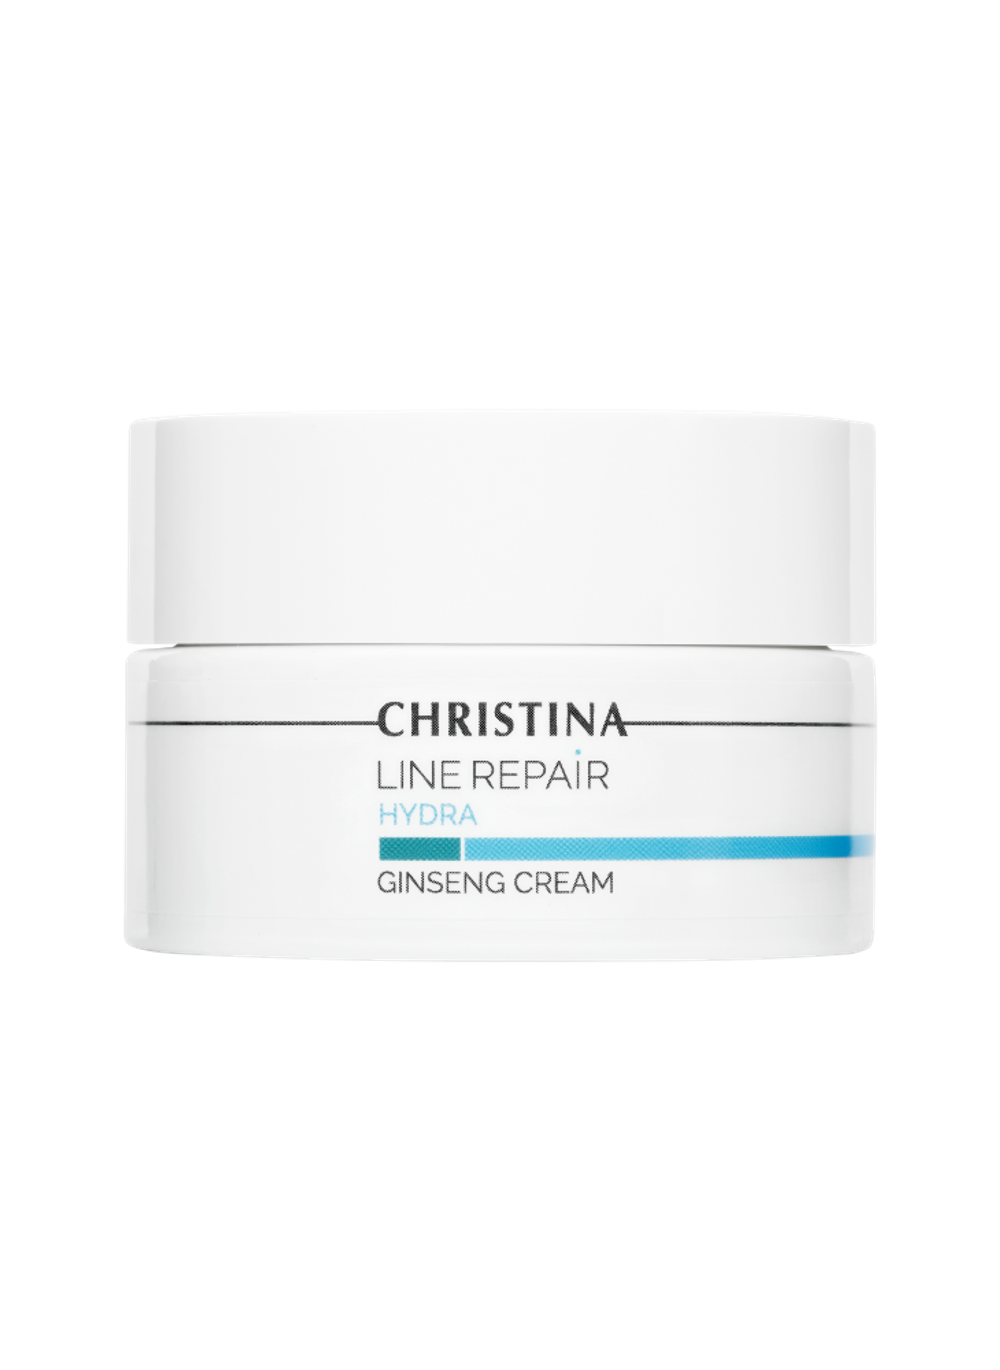 CHRISTINA Line Repair Hydra Ginseng Cream